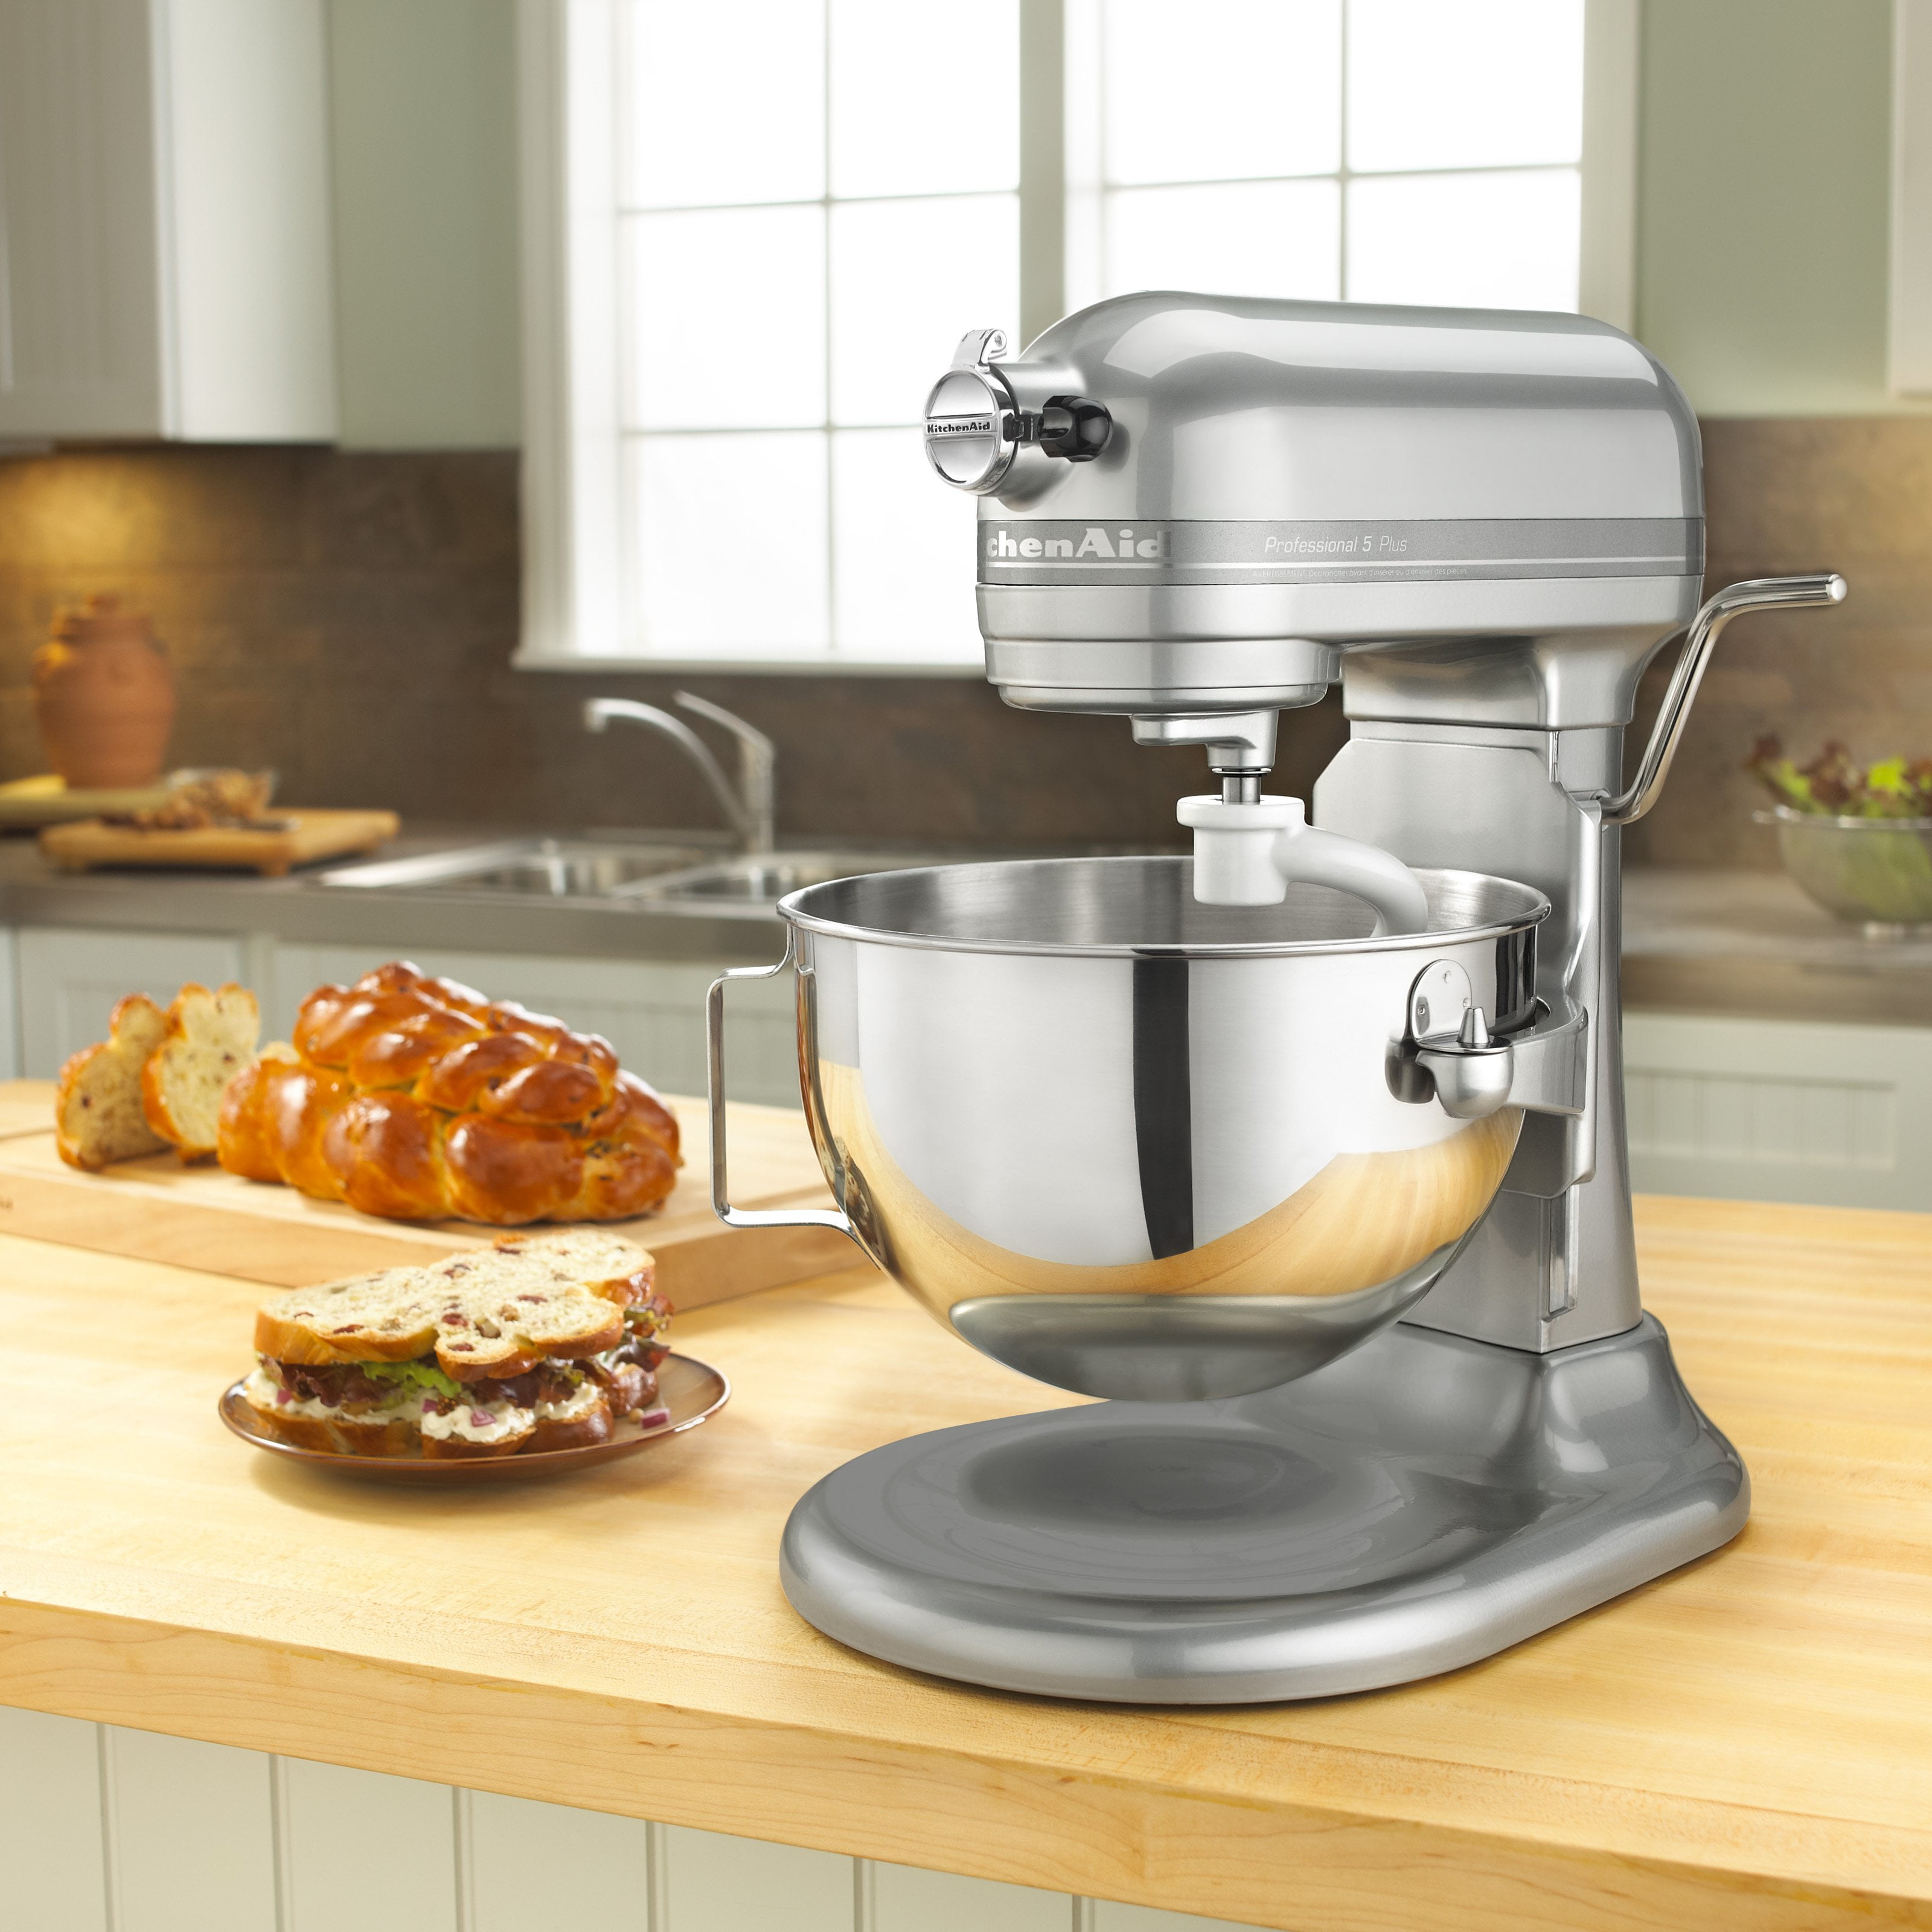  KitchenAid Professional 5 Plus Series Stand Mixers - Silver:  Home & Kitchen